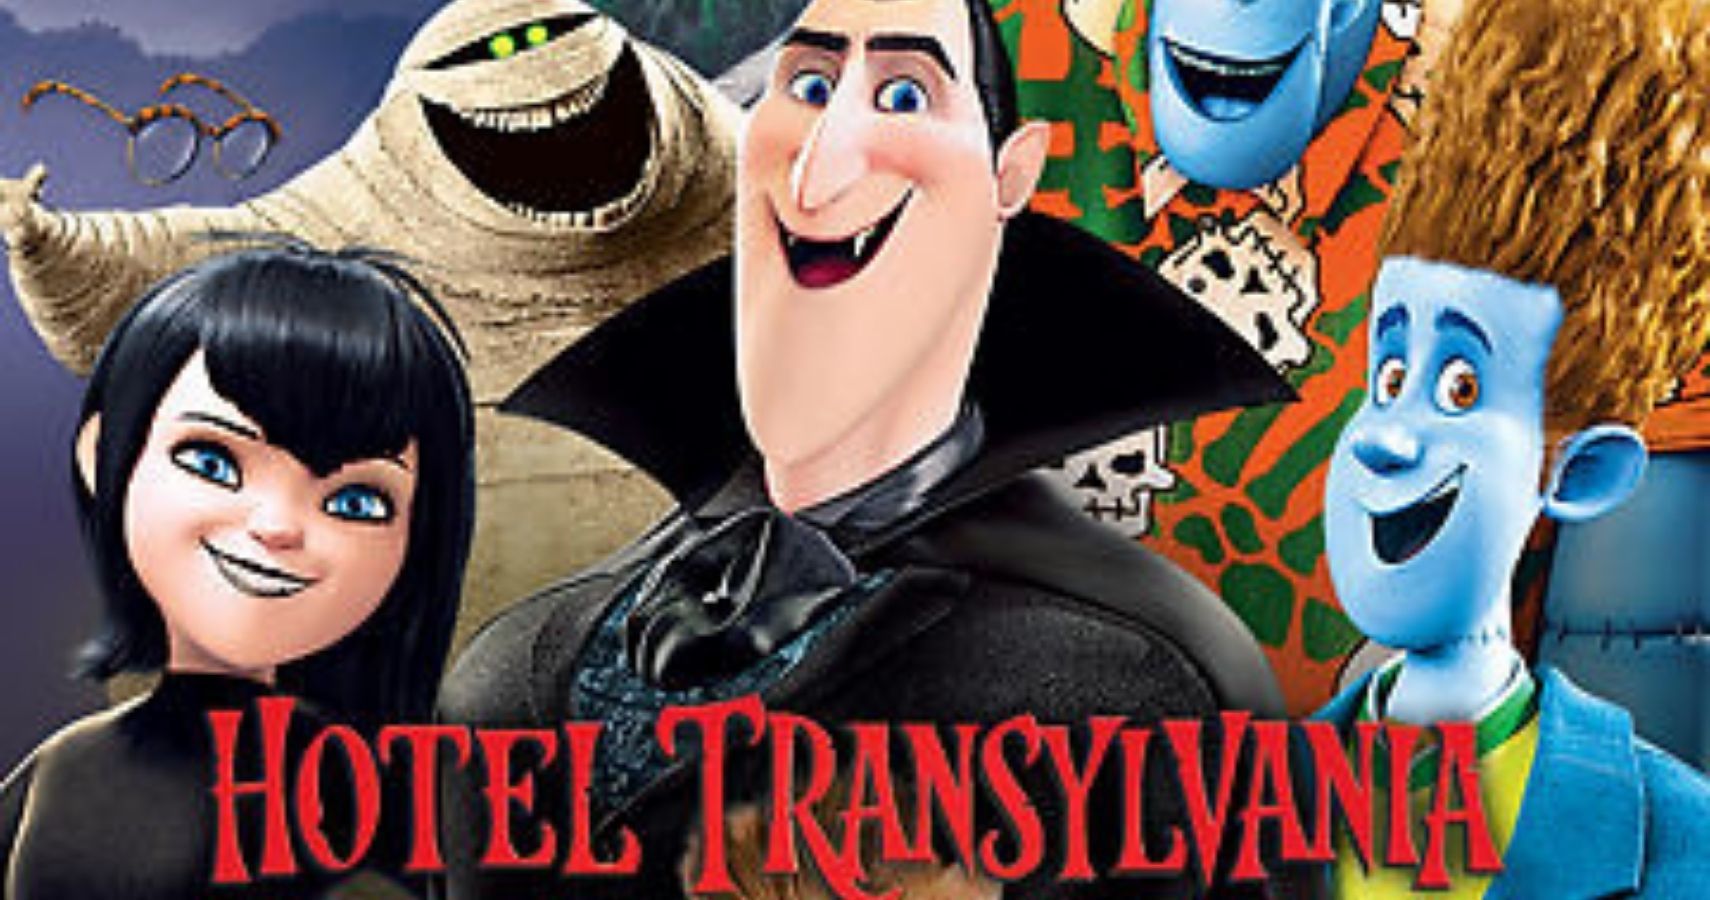 Adam Sandler's Animated Vampire Movie Made a (Family-Friendly